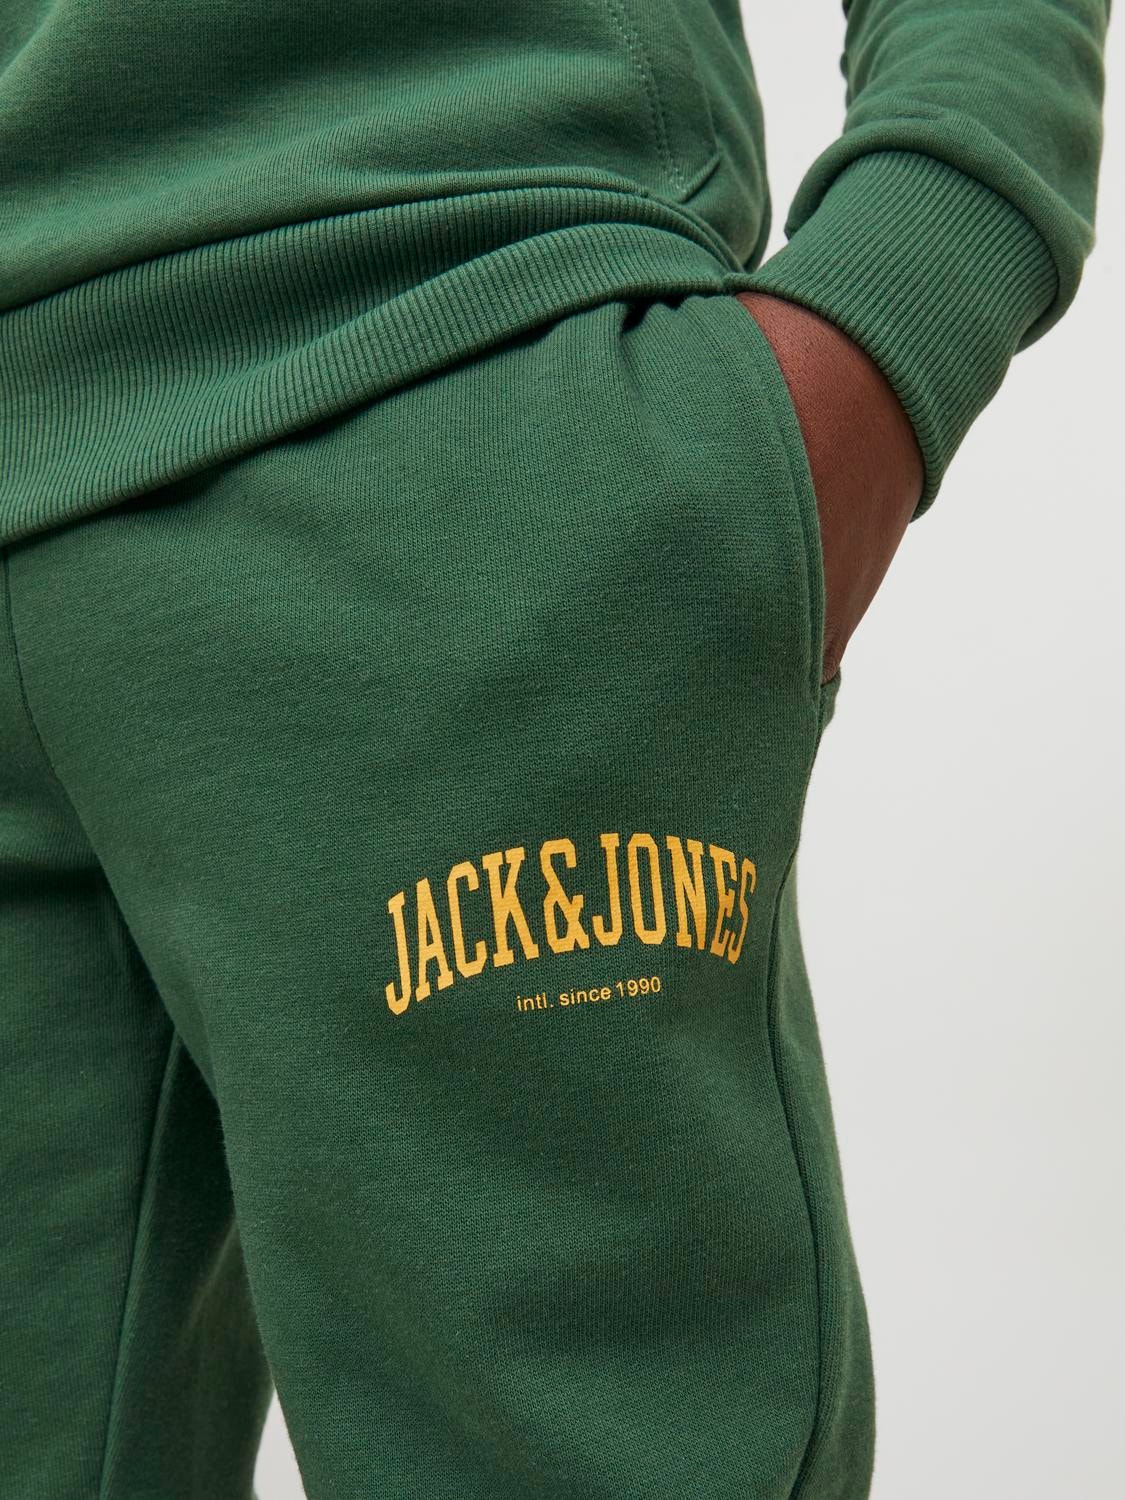 Jack & Jones Jogginghose Für jungs -Dark Green - 12237403